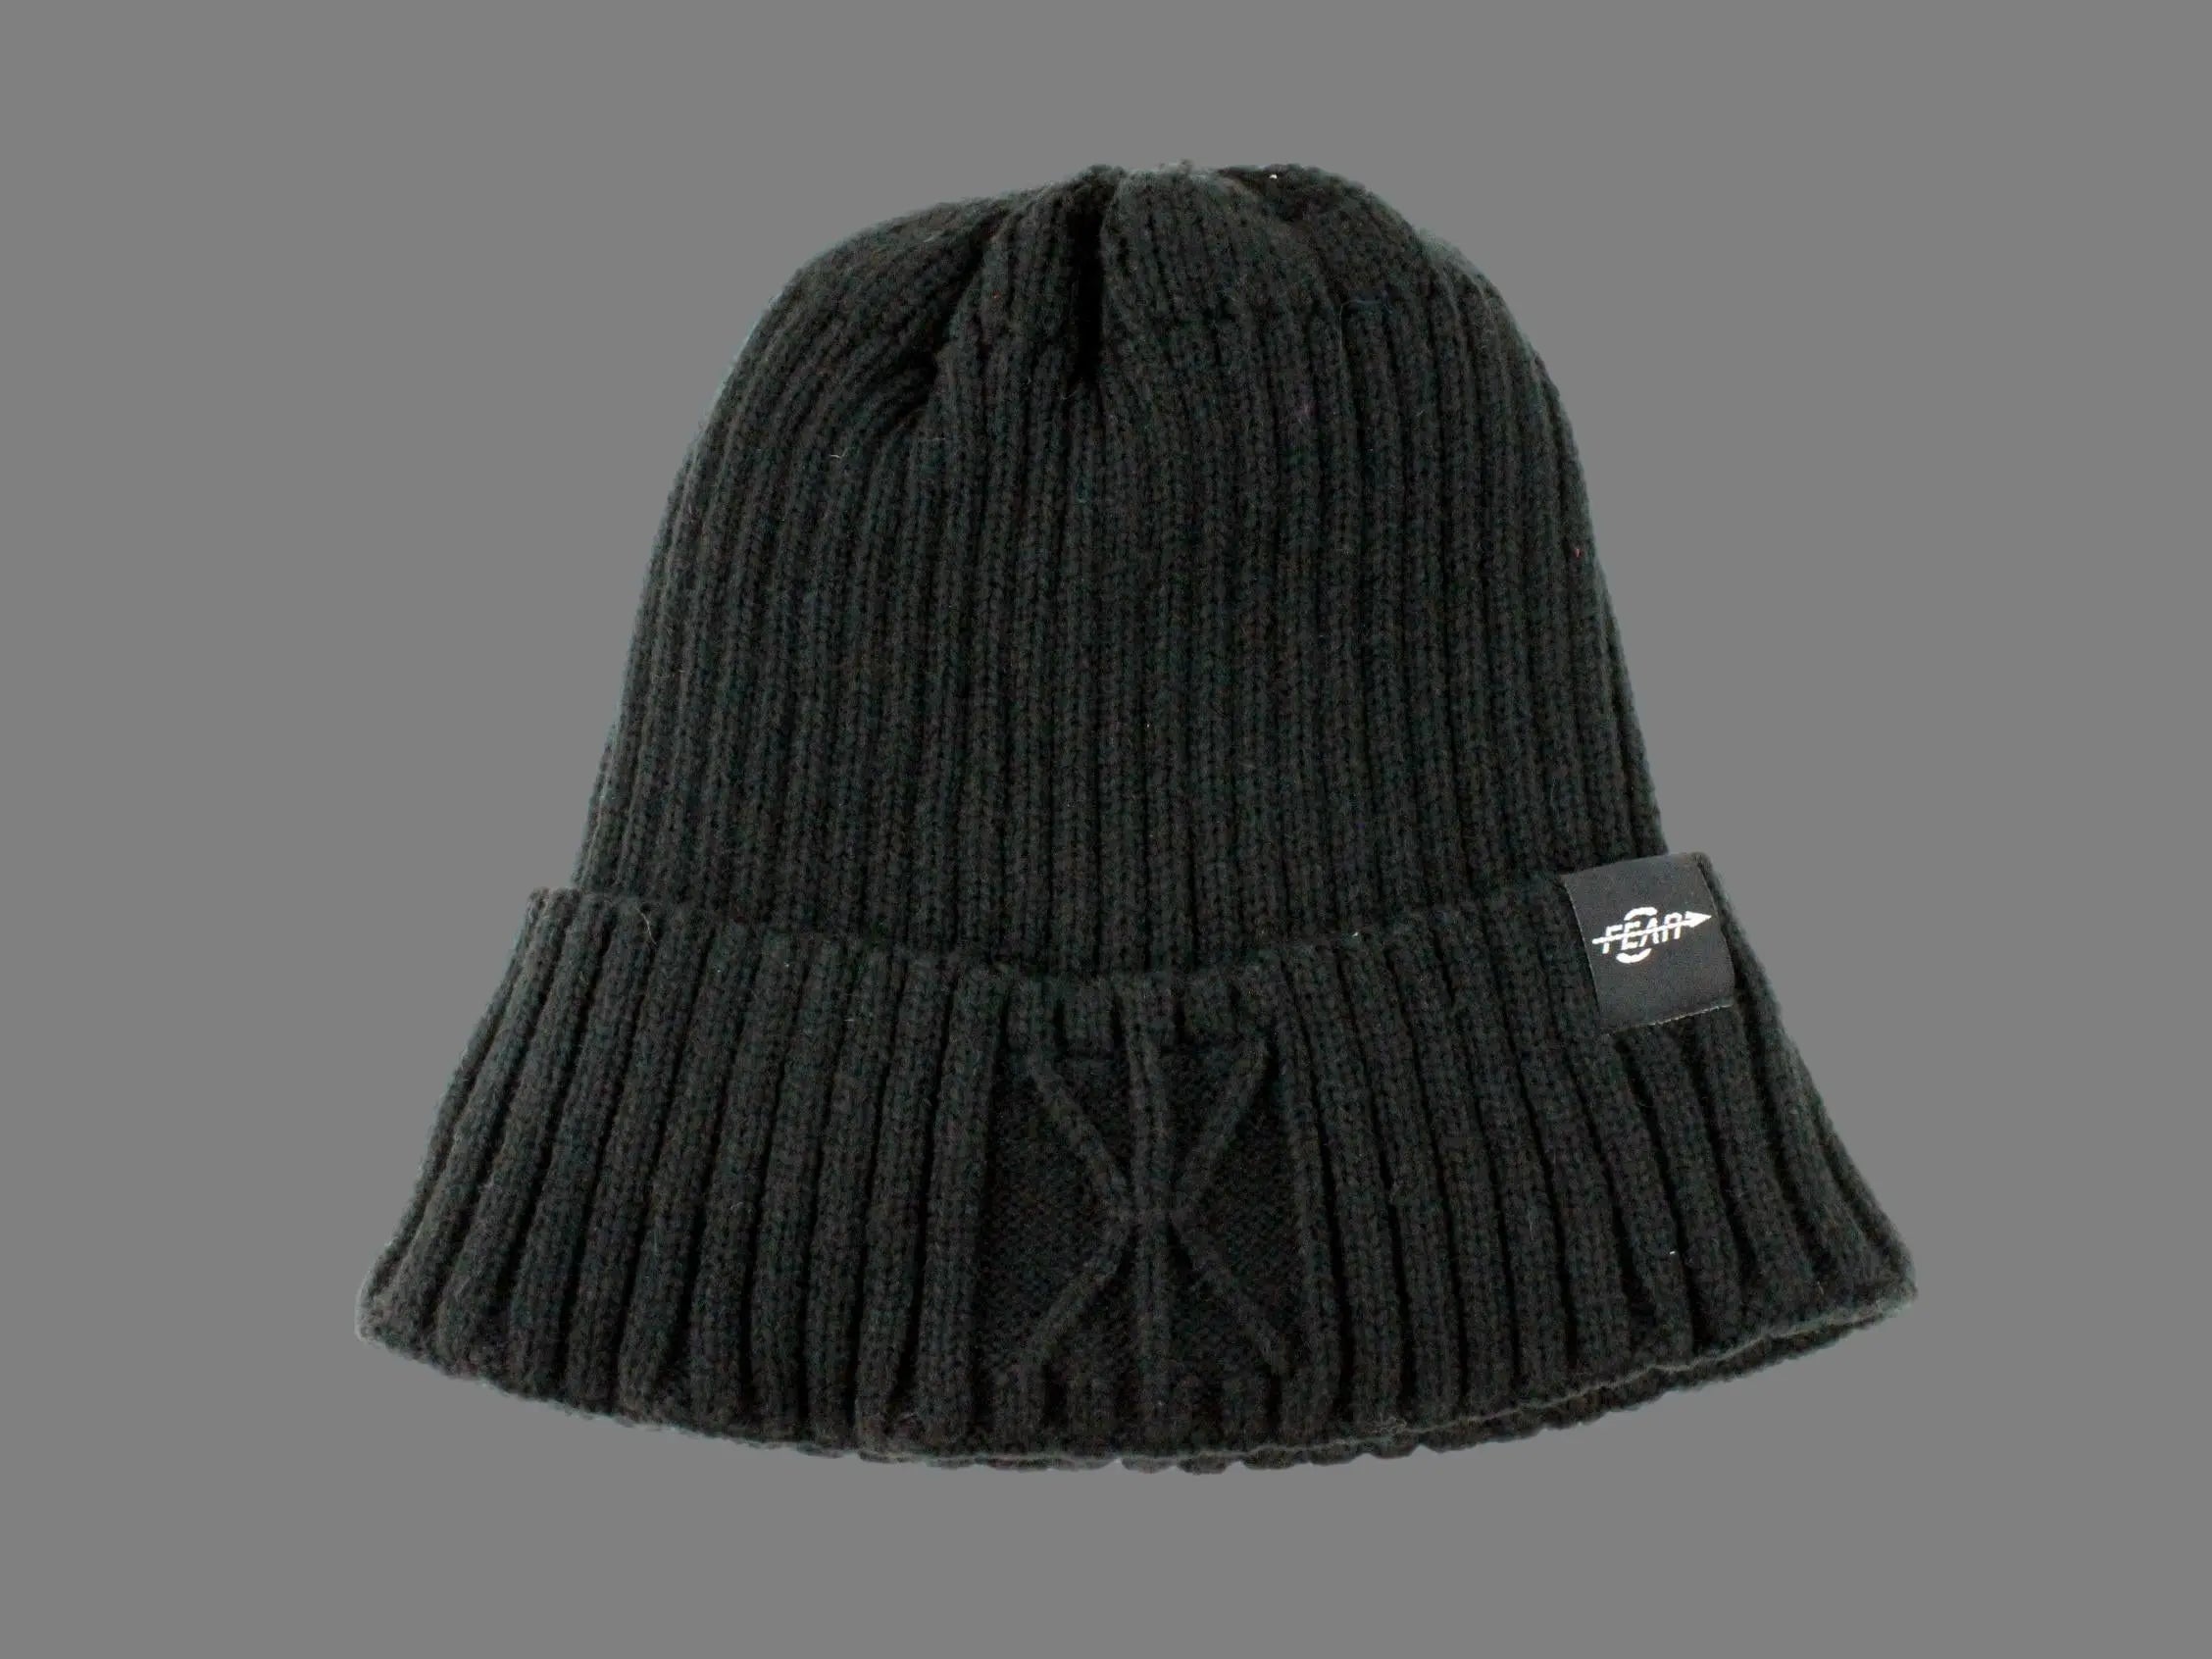 Fear0 NJ Warmest Watch Cap Black Plush Insulated Tactical Beanie Hat